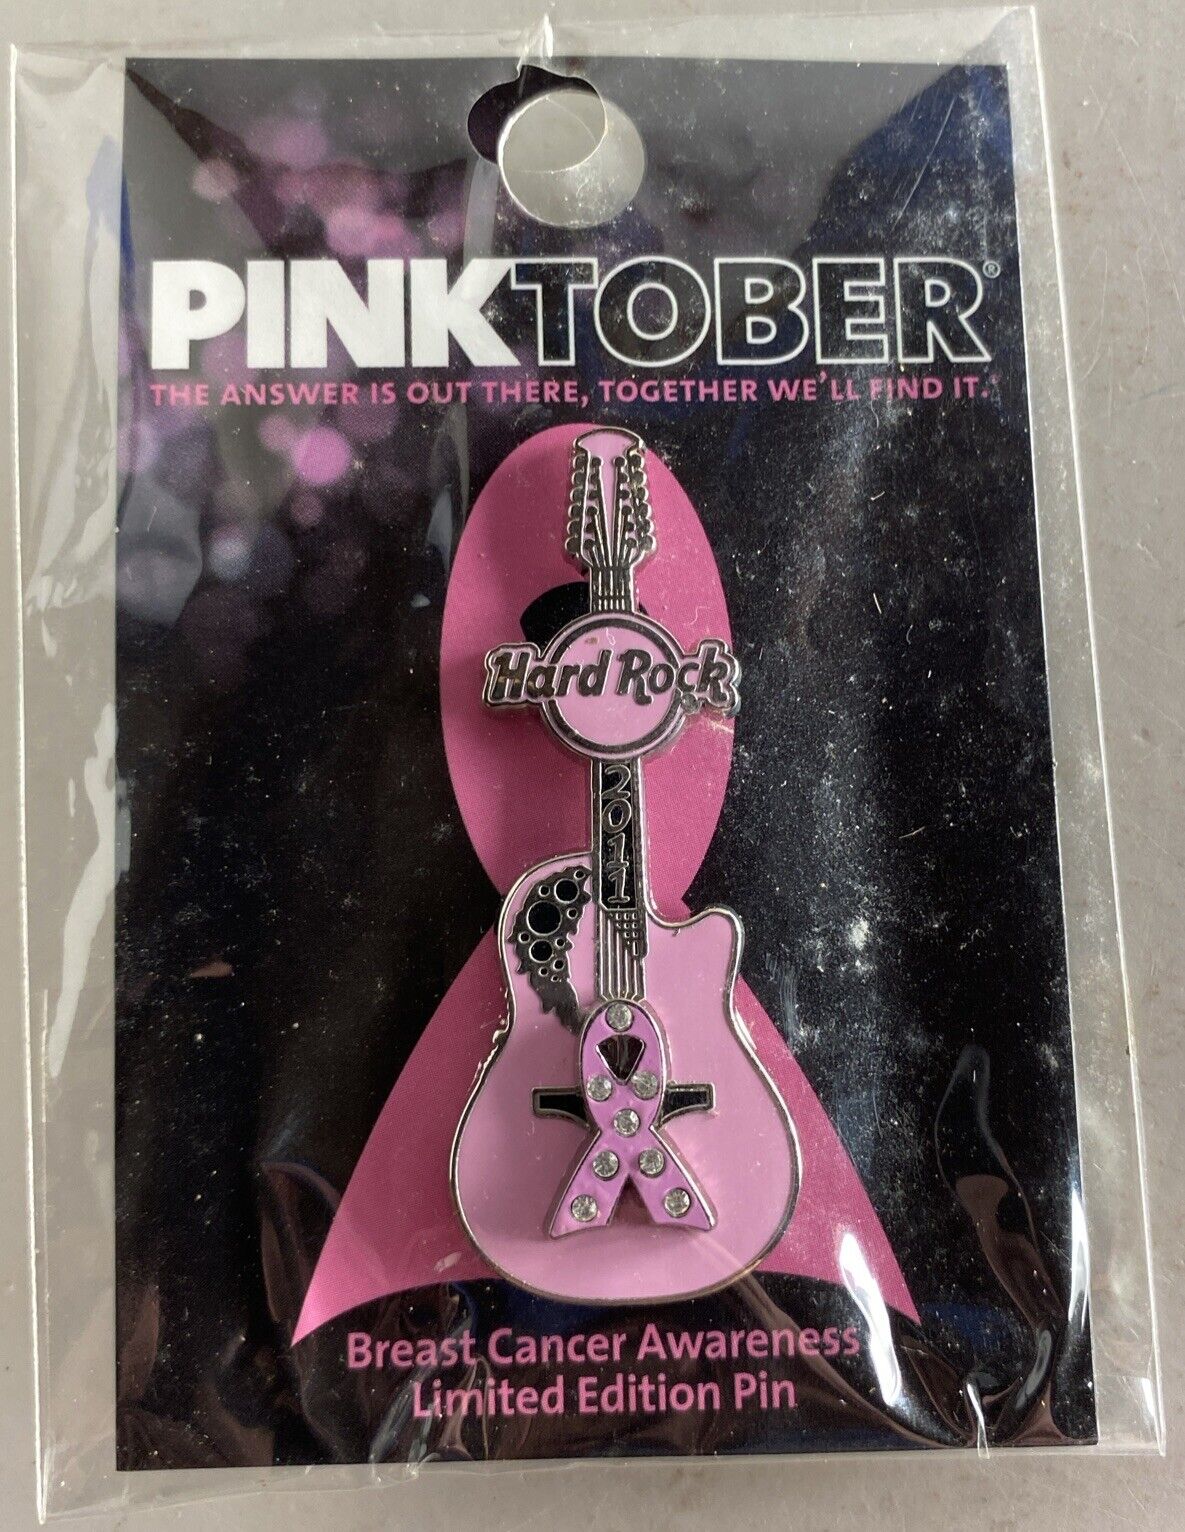  2011 BREAST CANCER AWARENESS PINKTOBER 3D HARD ROCK GUITAR PIN LIMITED EDITION